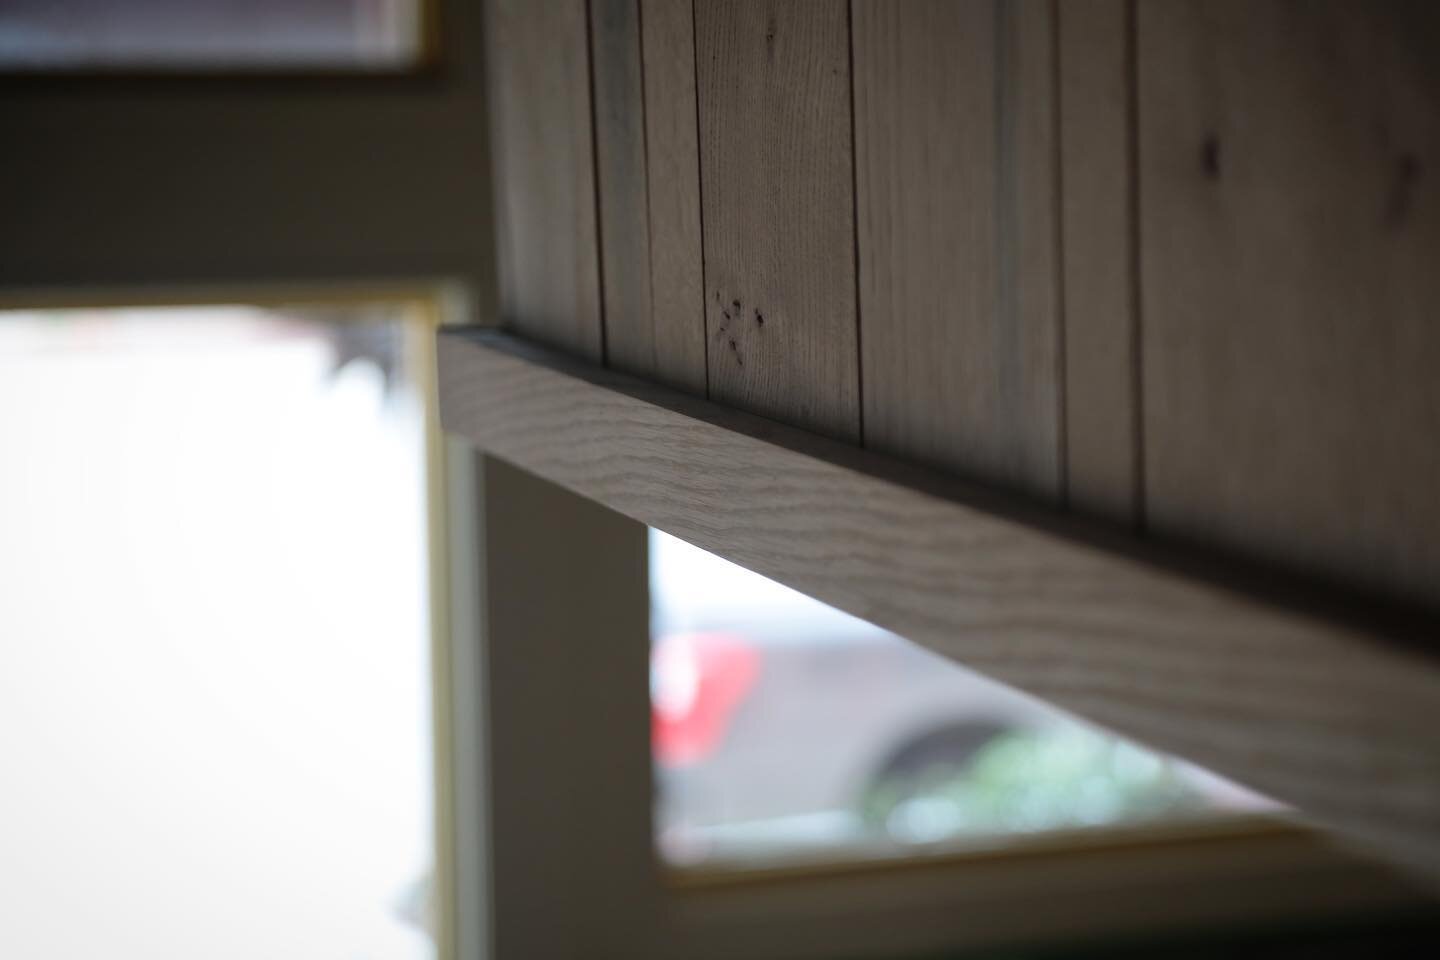 210409~ Collier Plank Board Canopy, White Oak Trim

@thefruteriasa / @woodcoltd 

#designbuild #digitalcraft #digitalfabrication #runcnc #sanantonio #sanantonio #southtowns